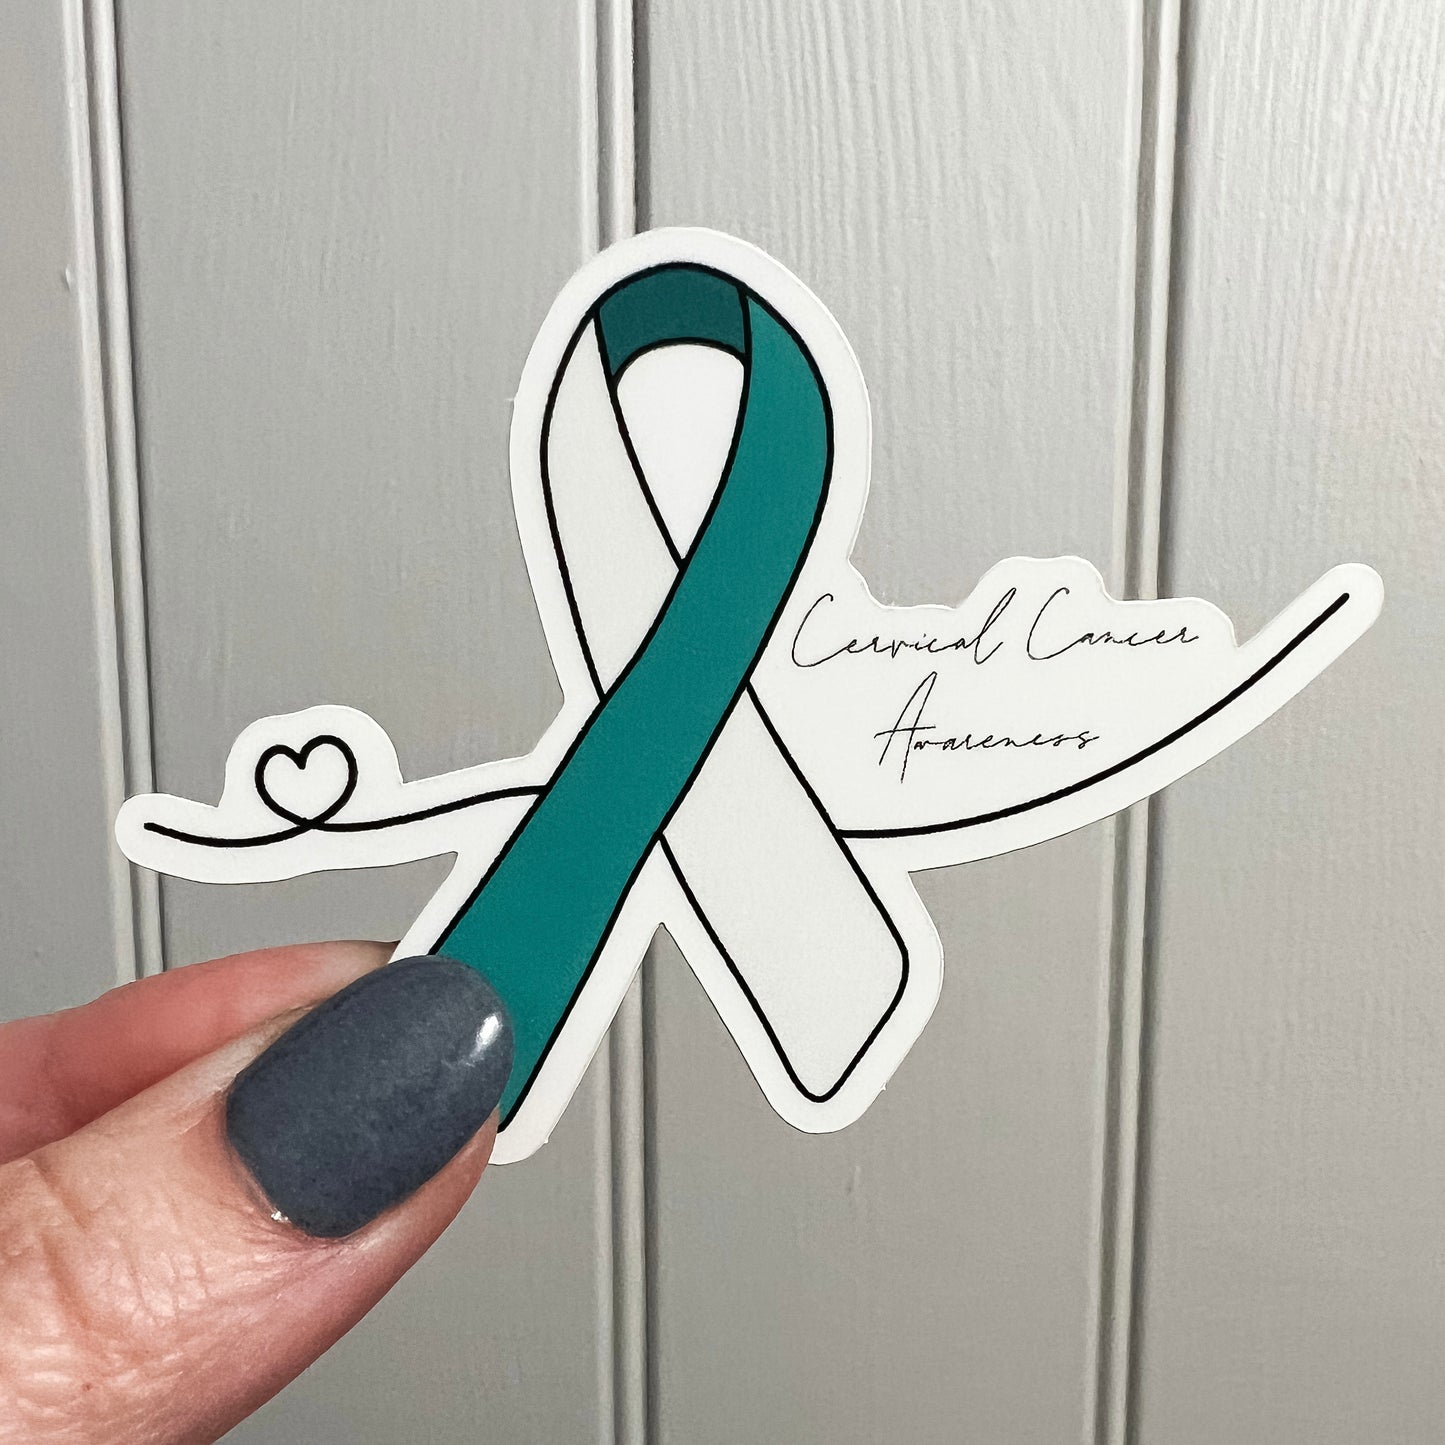 Cervical Cancer Awareness Sticker